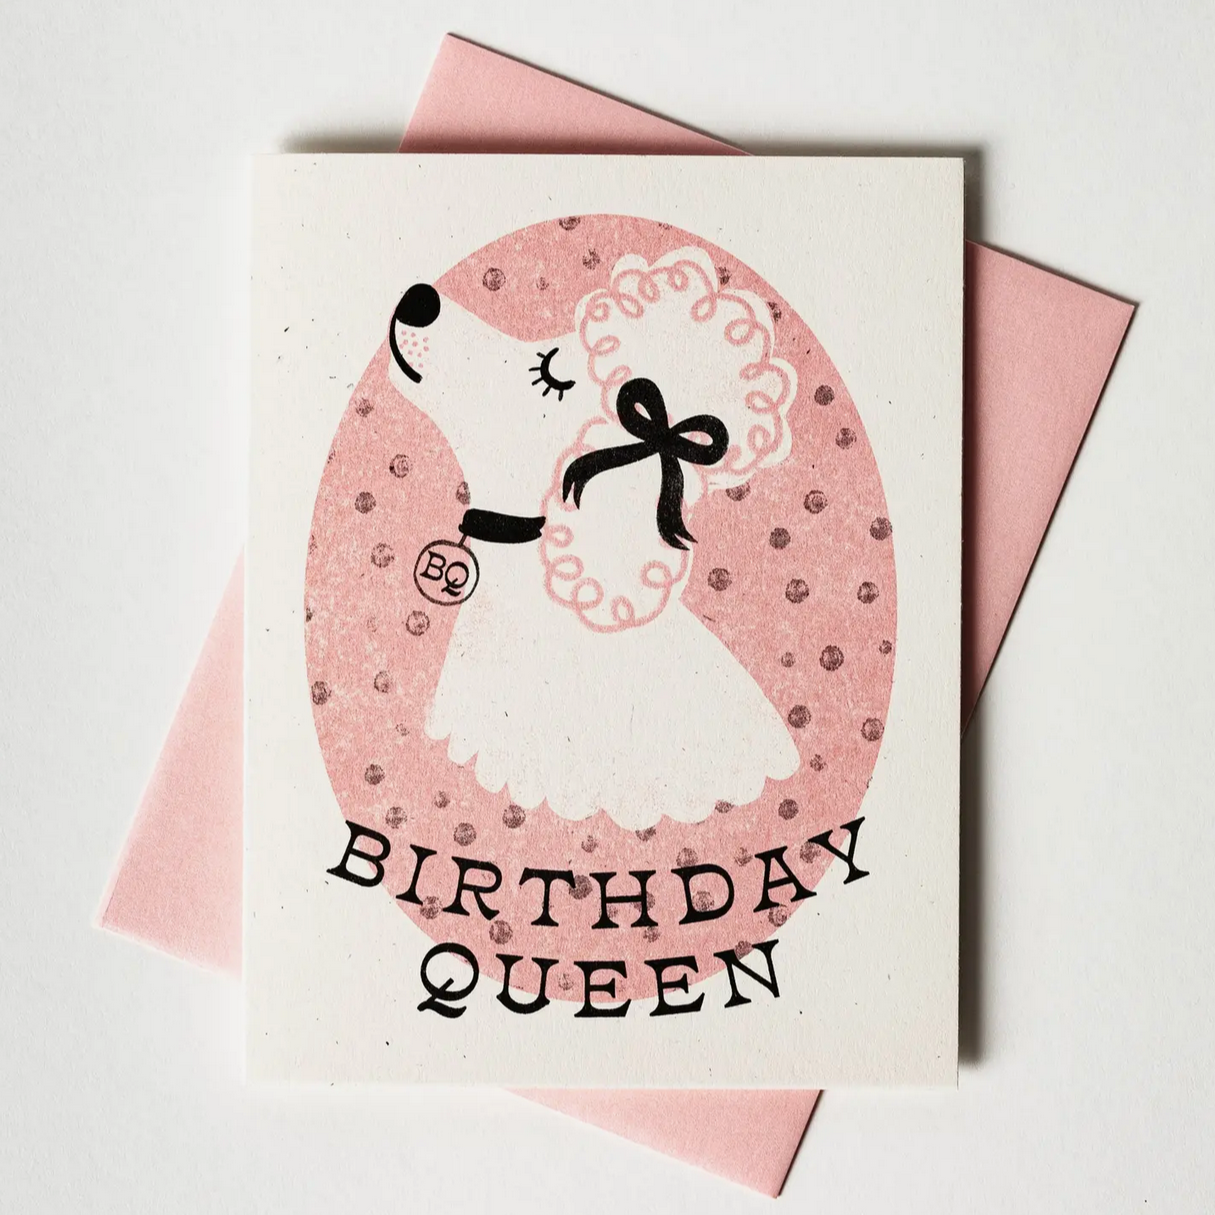 Birthday Queen Dog - Risograph Card -birthday